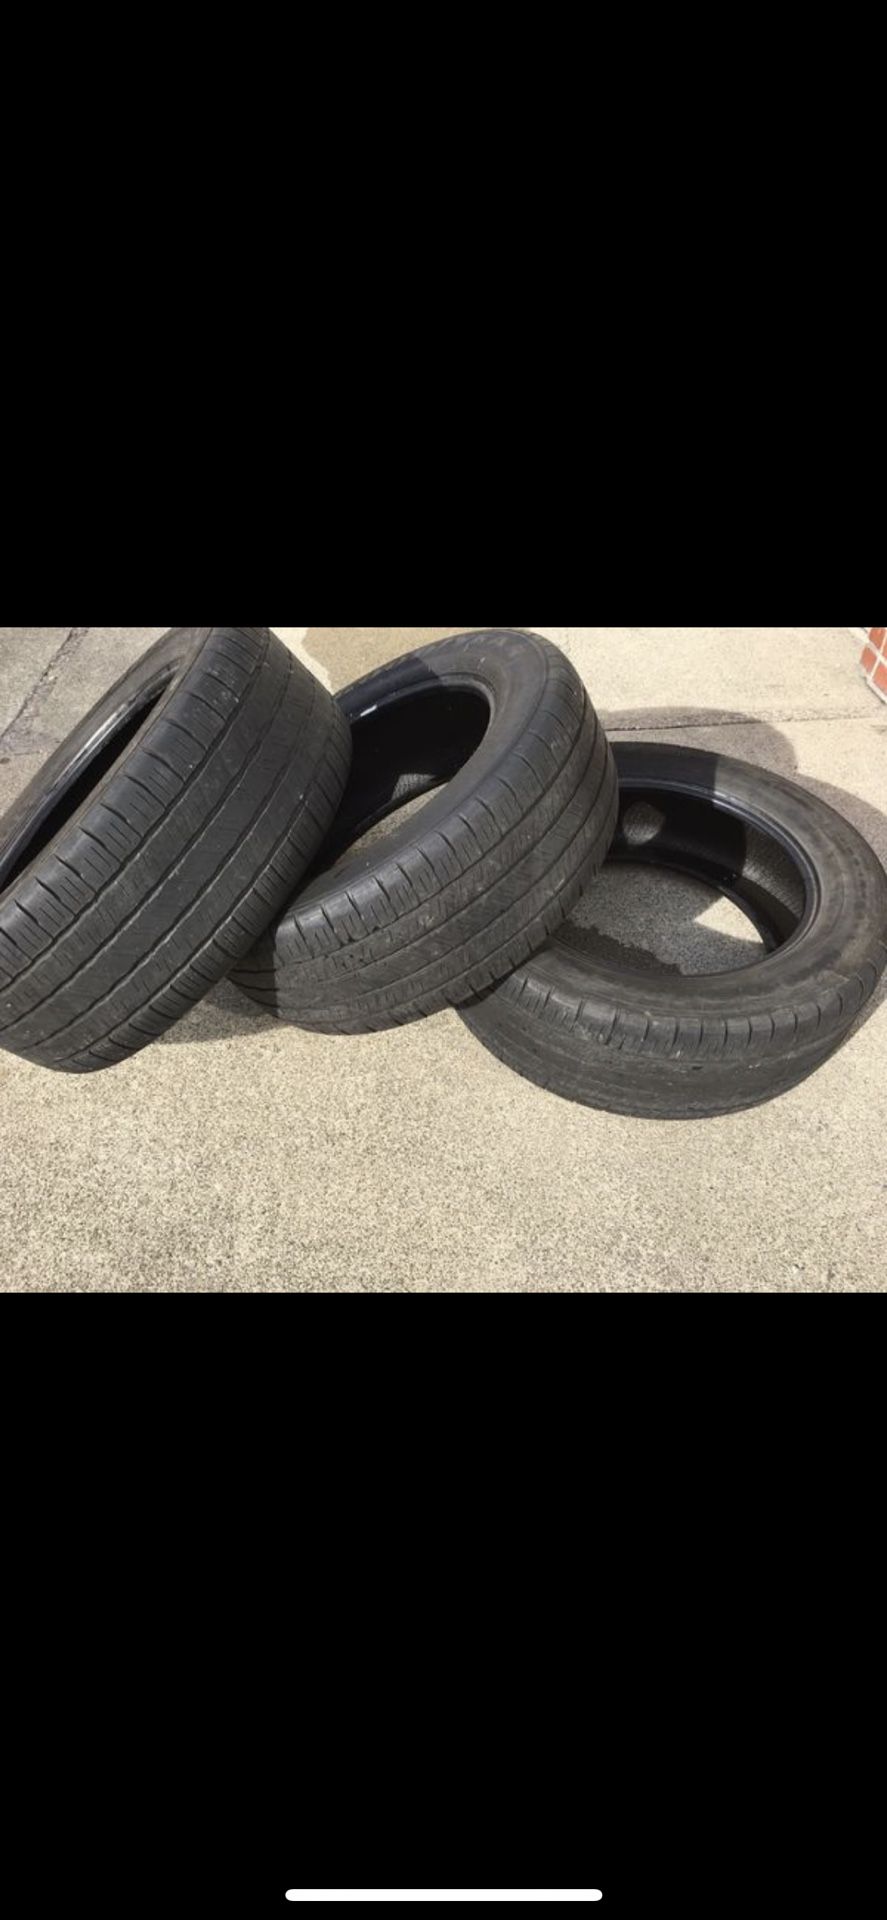 Free tires